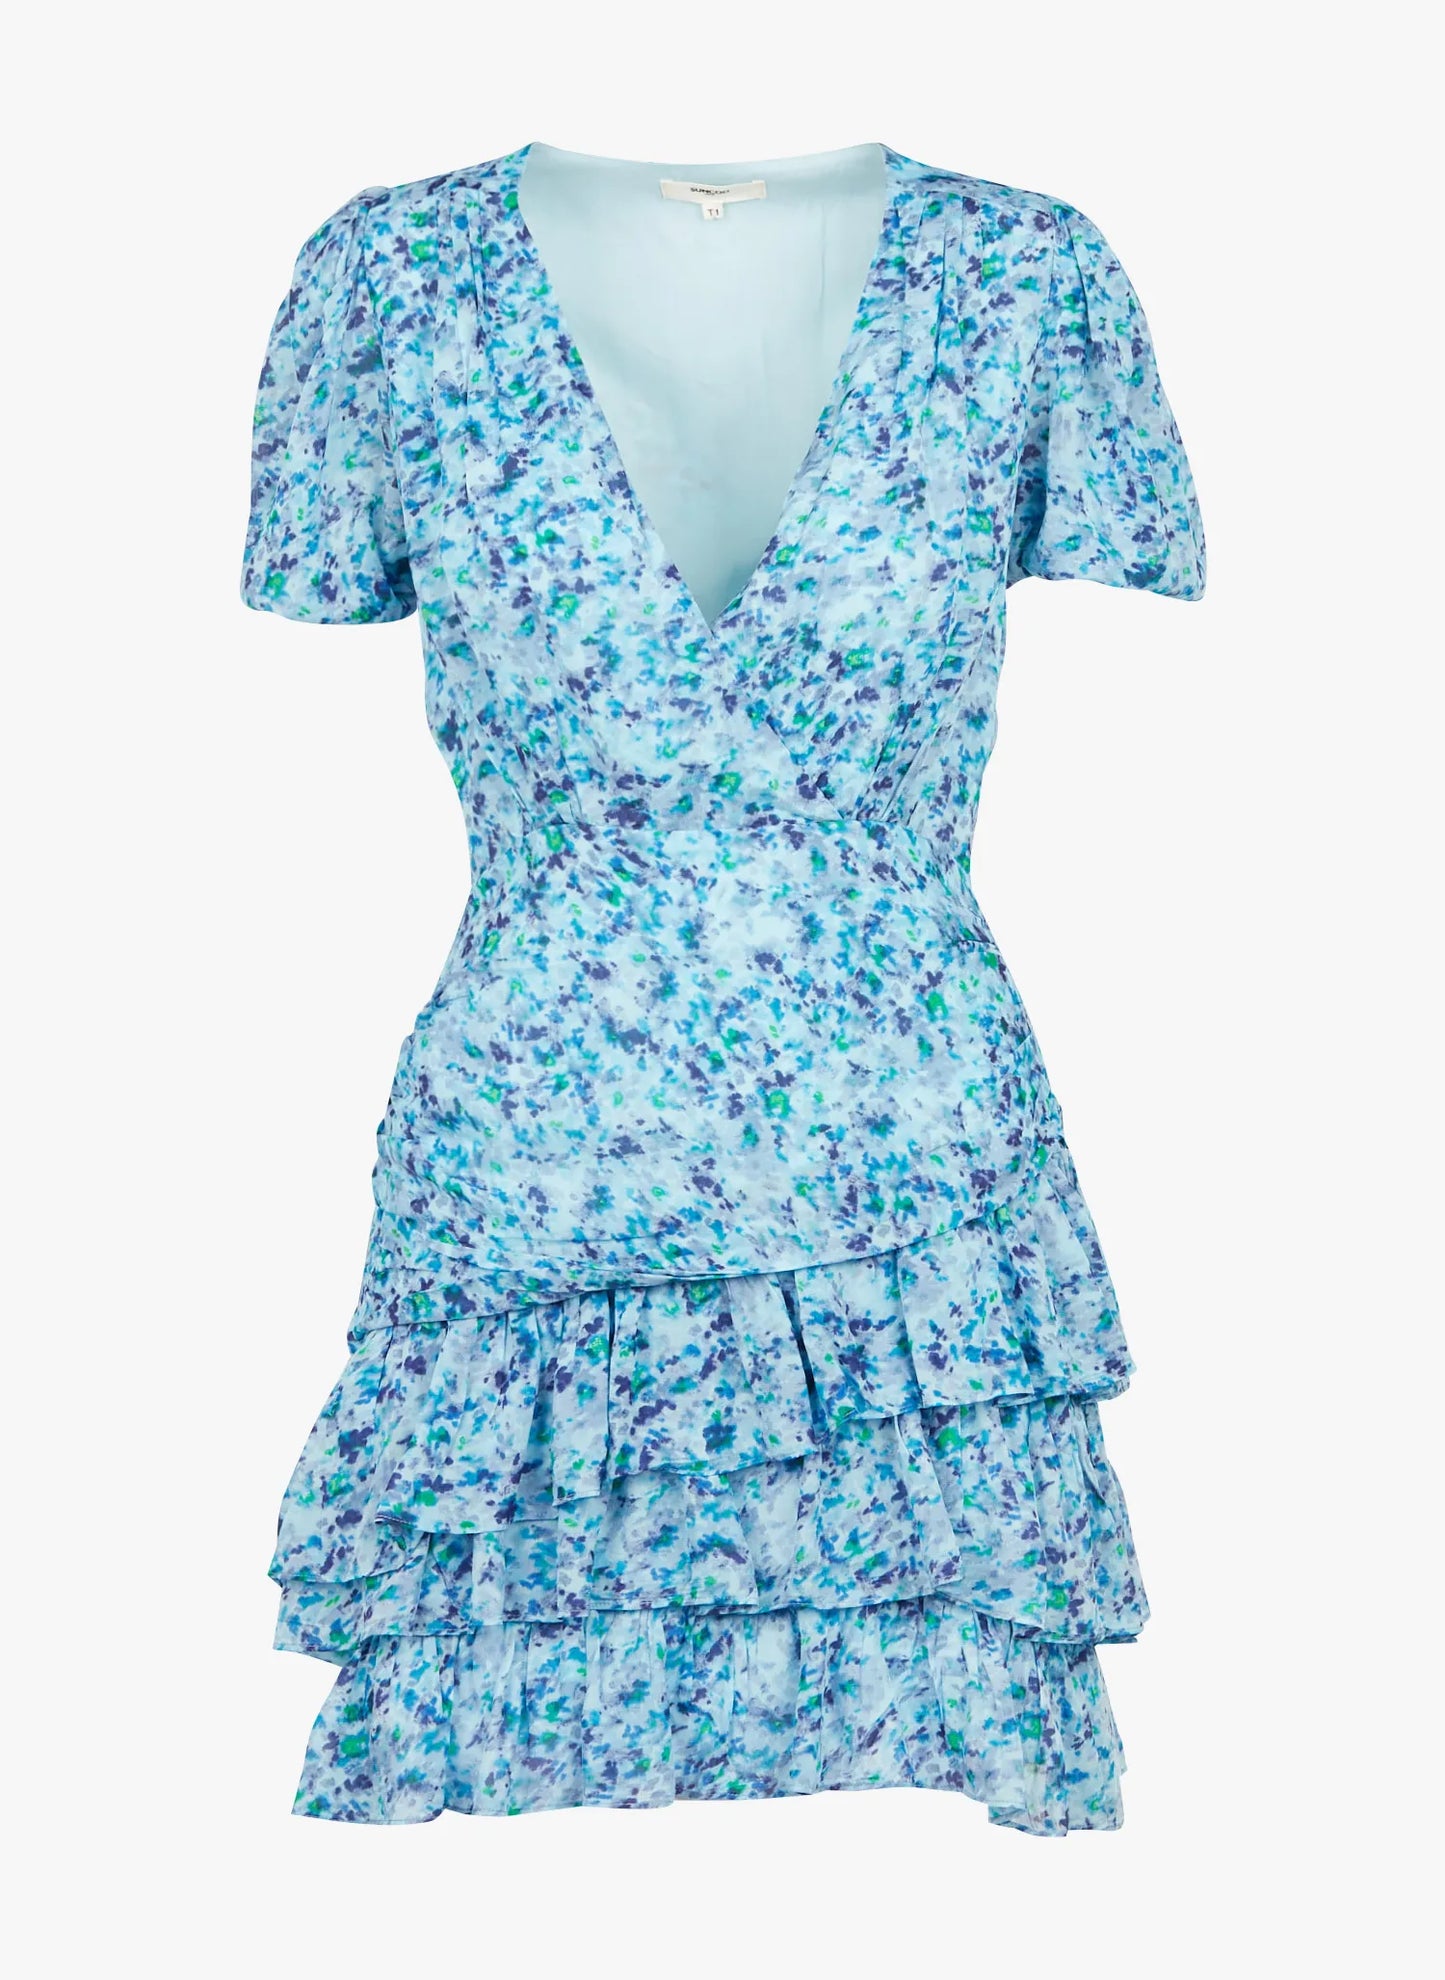 Clea Dress (Size 8)